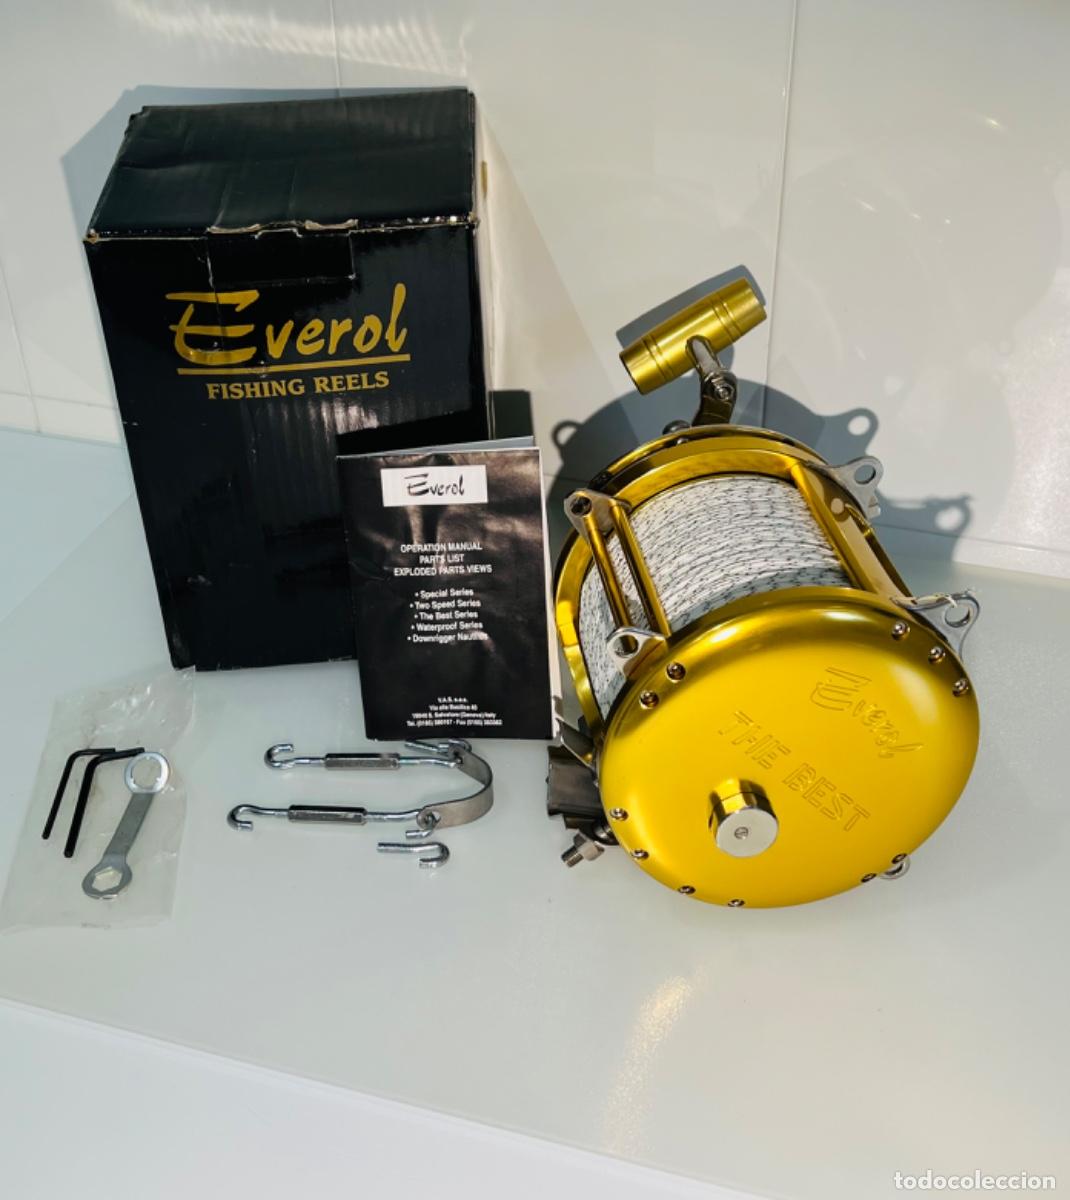 everol “the best” series 14/0. 130lbs. carrete - Compra venta en